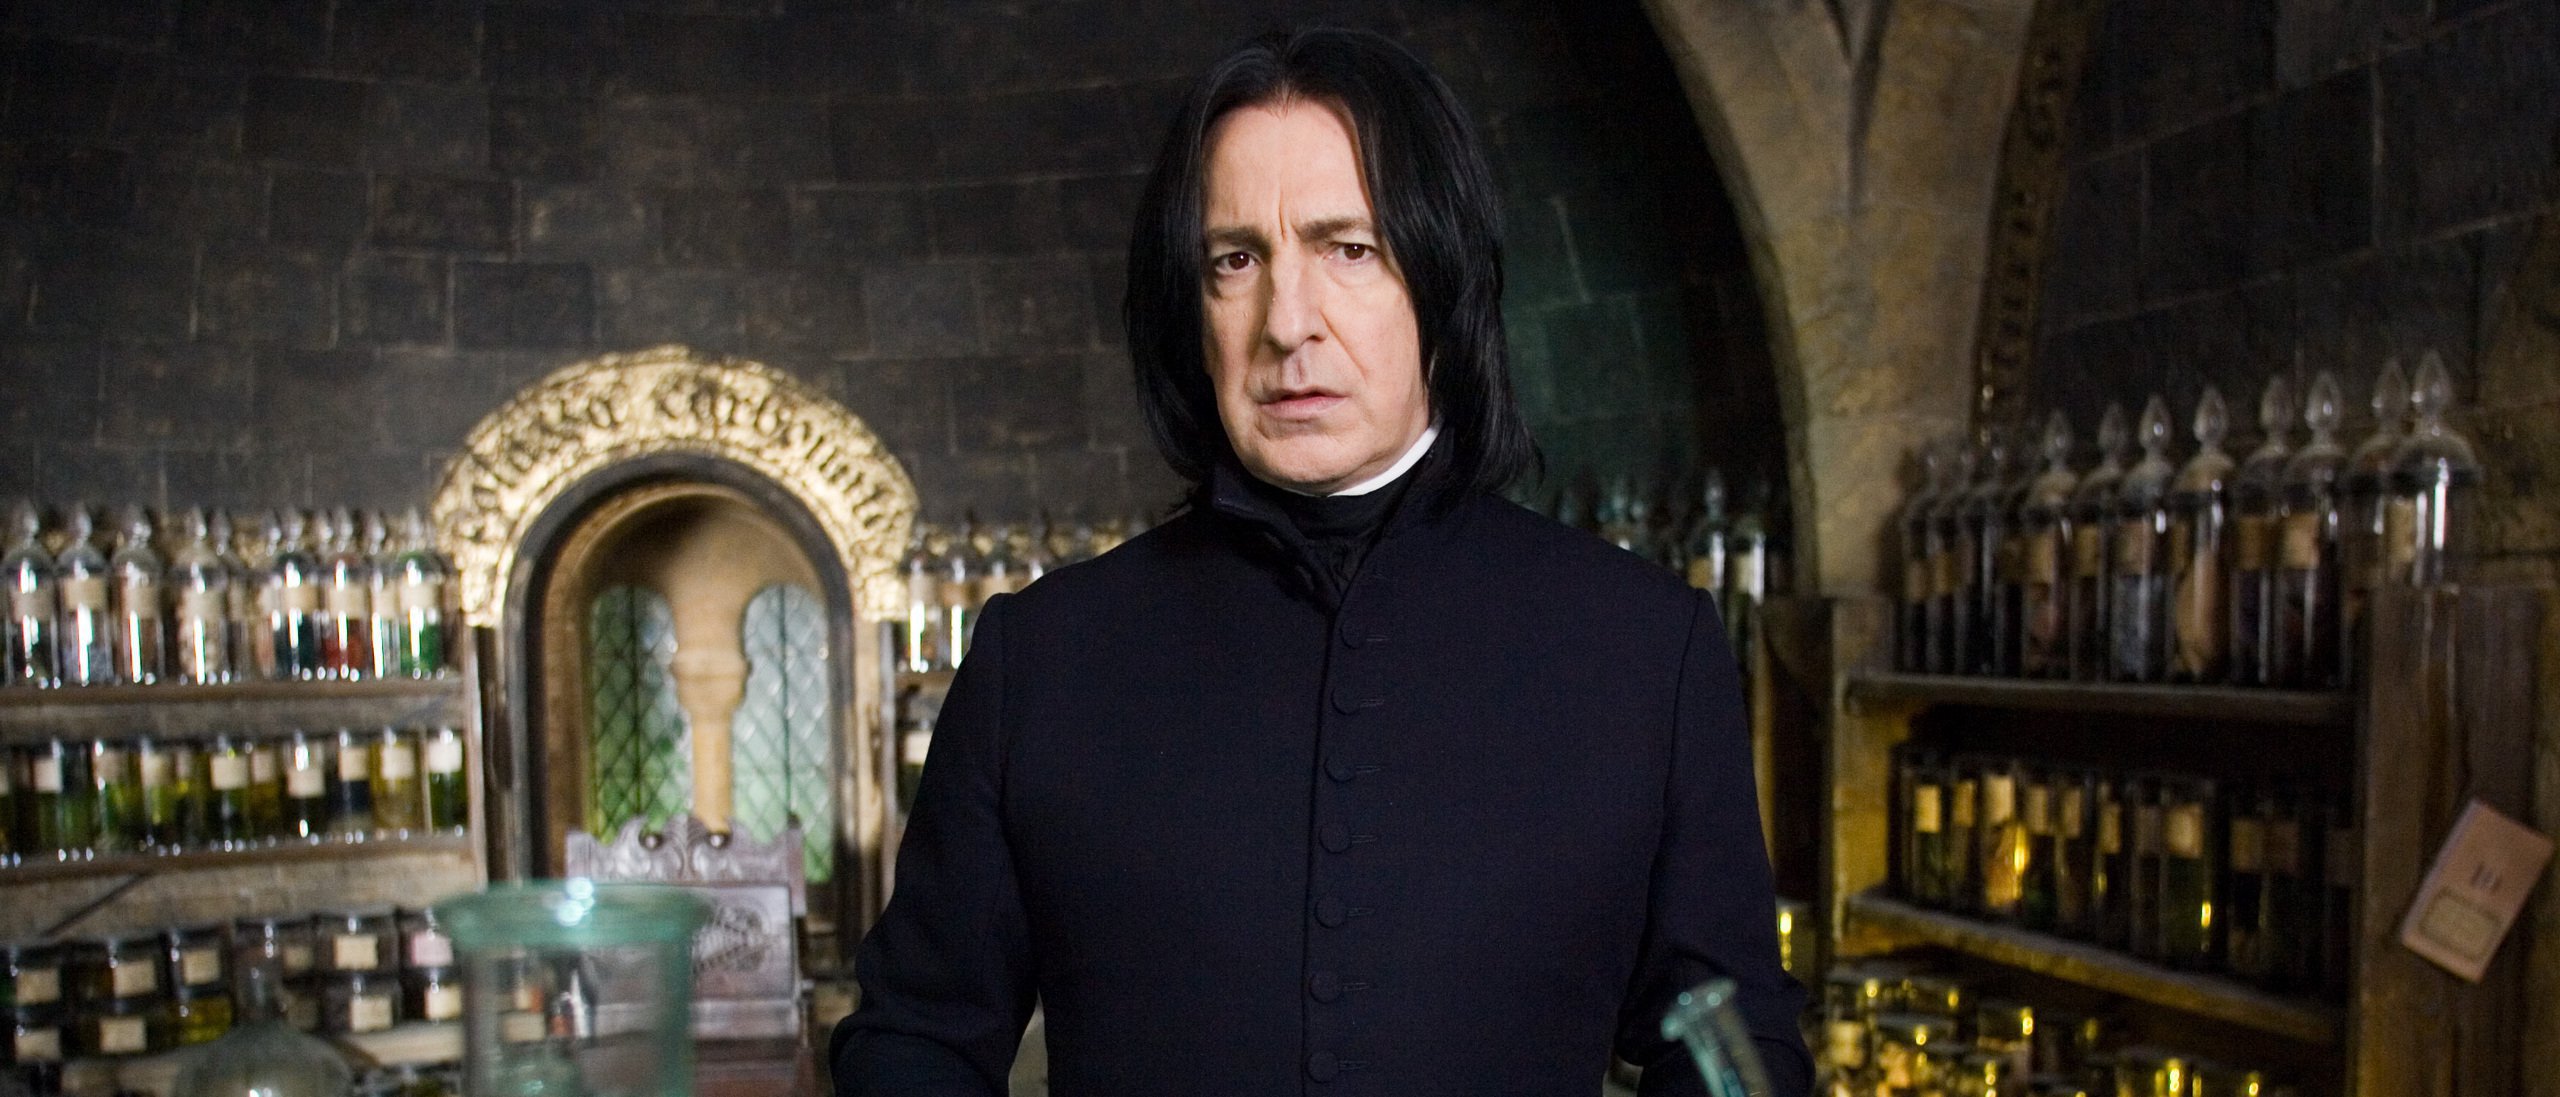 Alan-Rickman-as-Severus-Snape-in-Harry-Potter.jpg